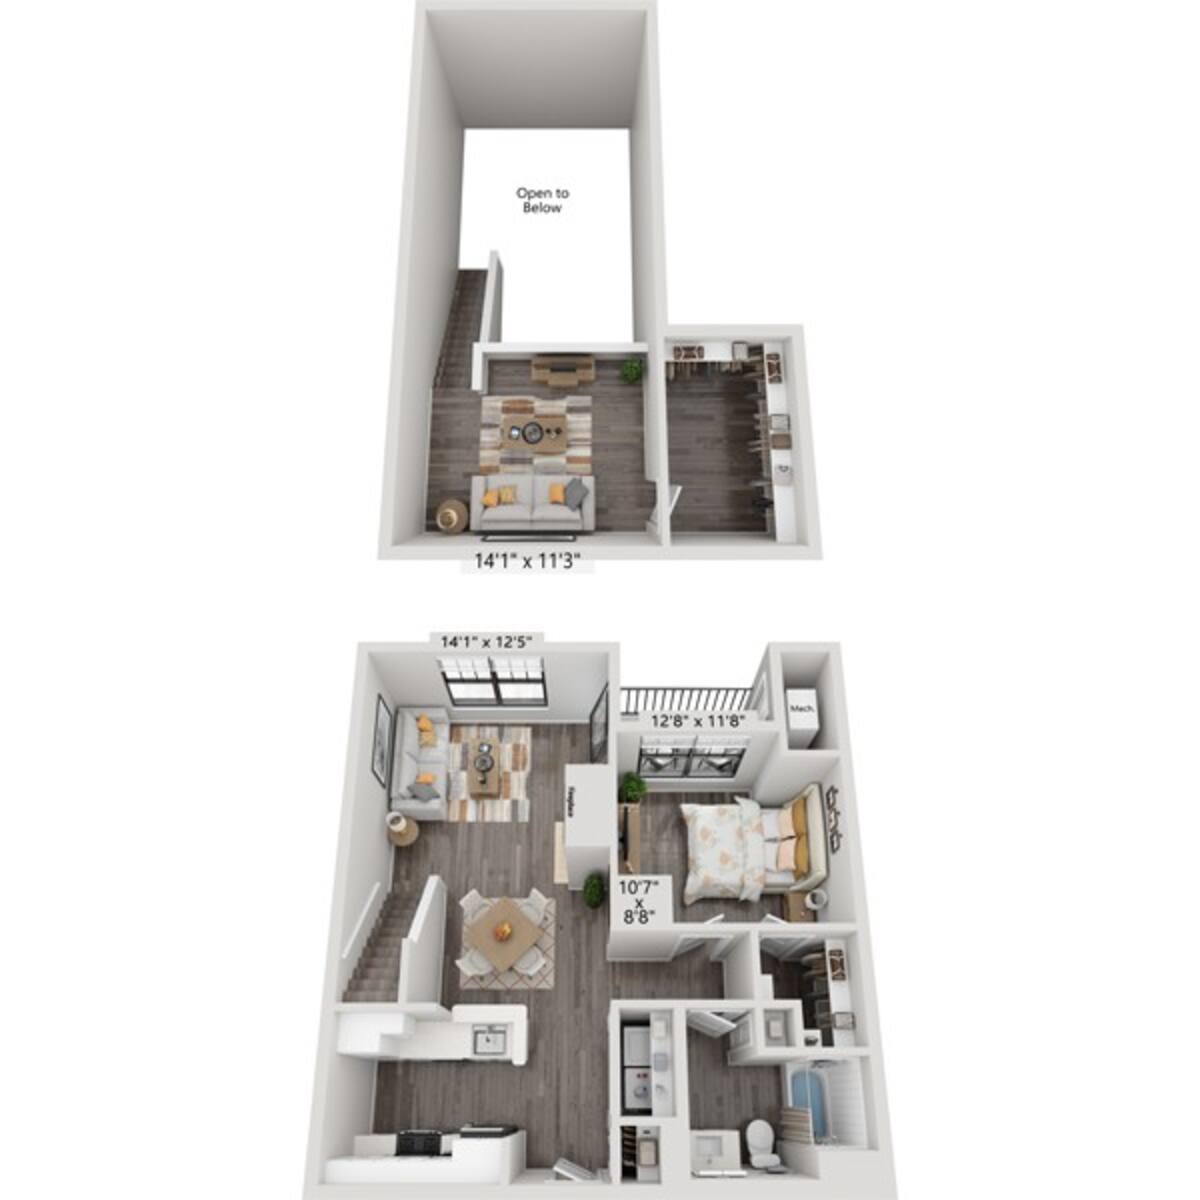 Floorplan diagram for One Bedroom A1G1L, showing 1 bedroom